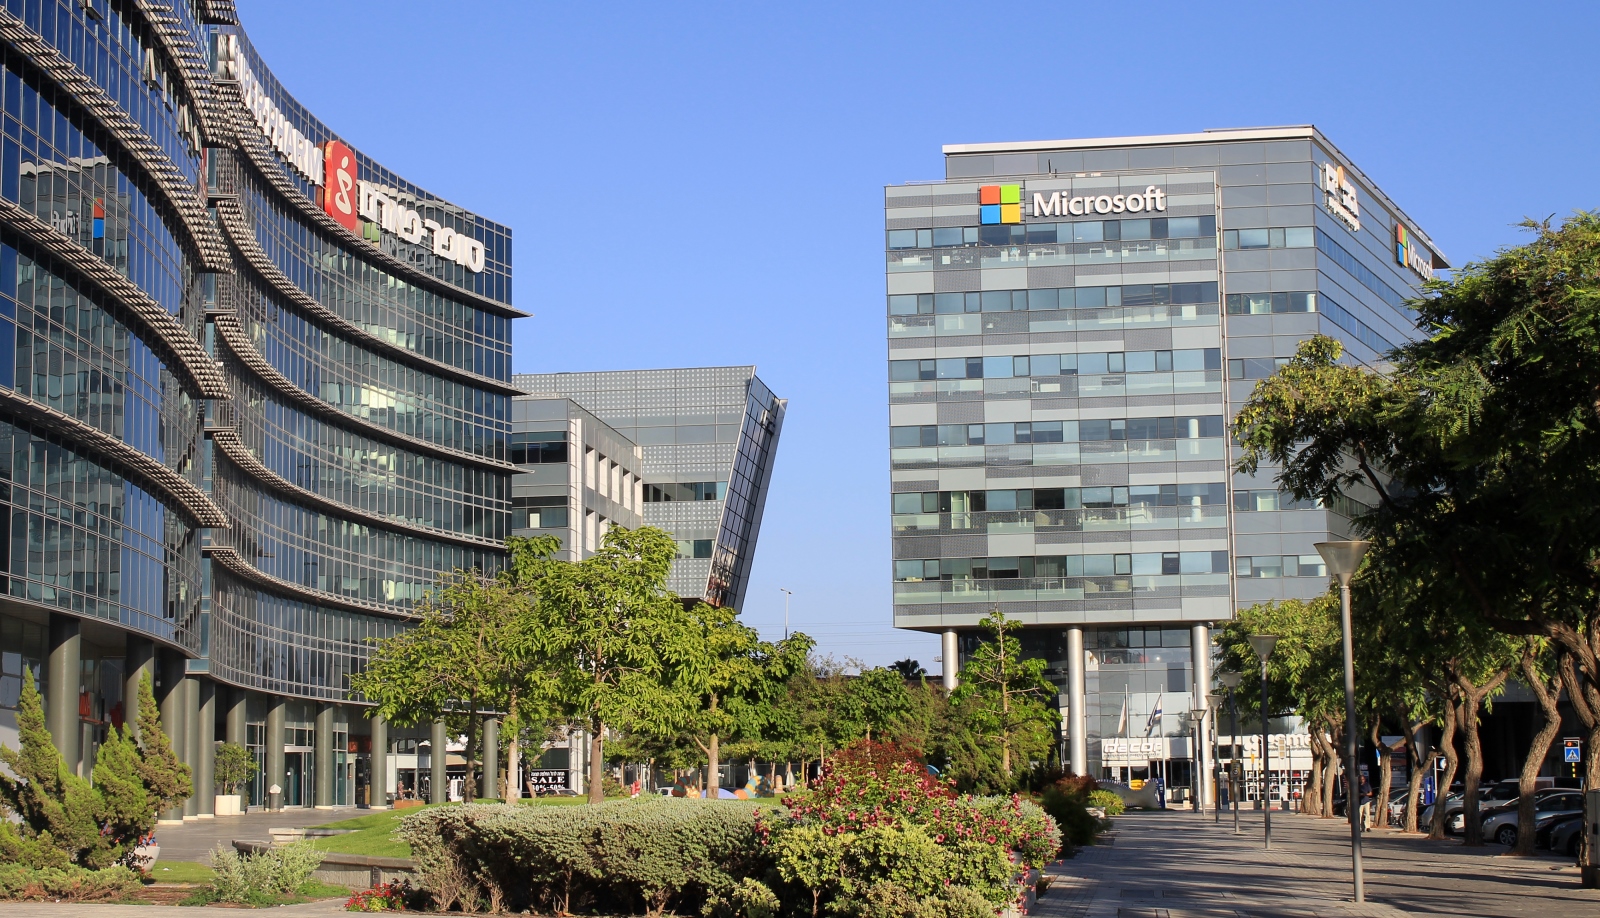 Microsoft headquarters in Herzliya. Photo via Shutterstock.com